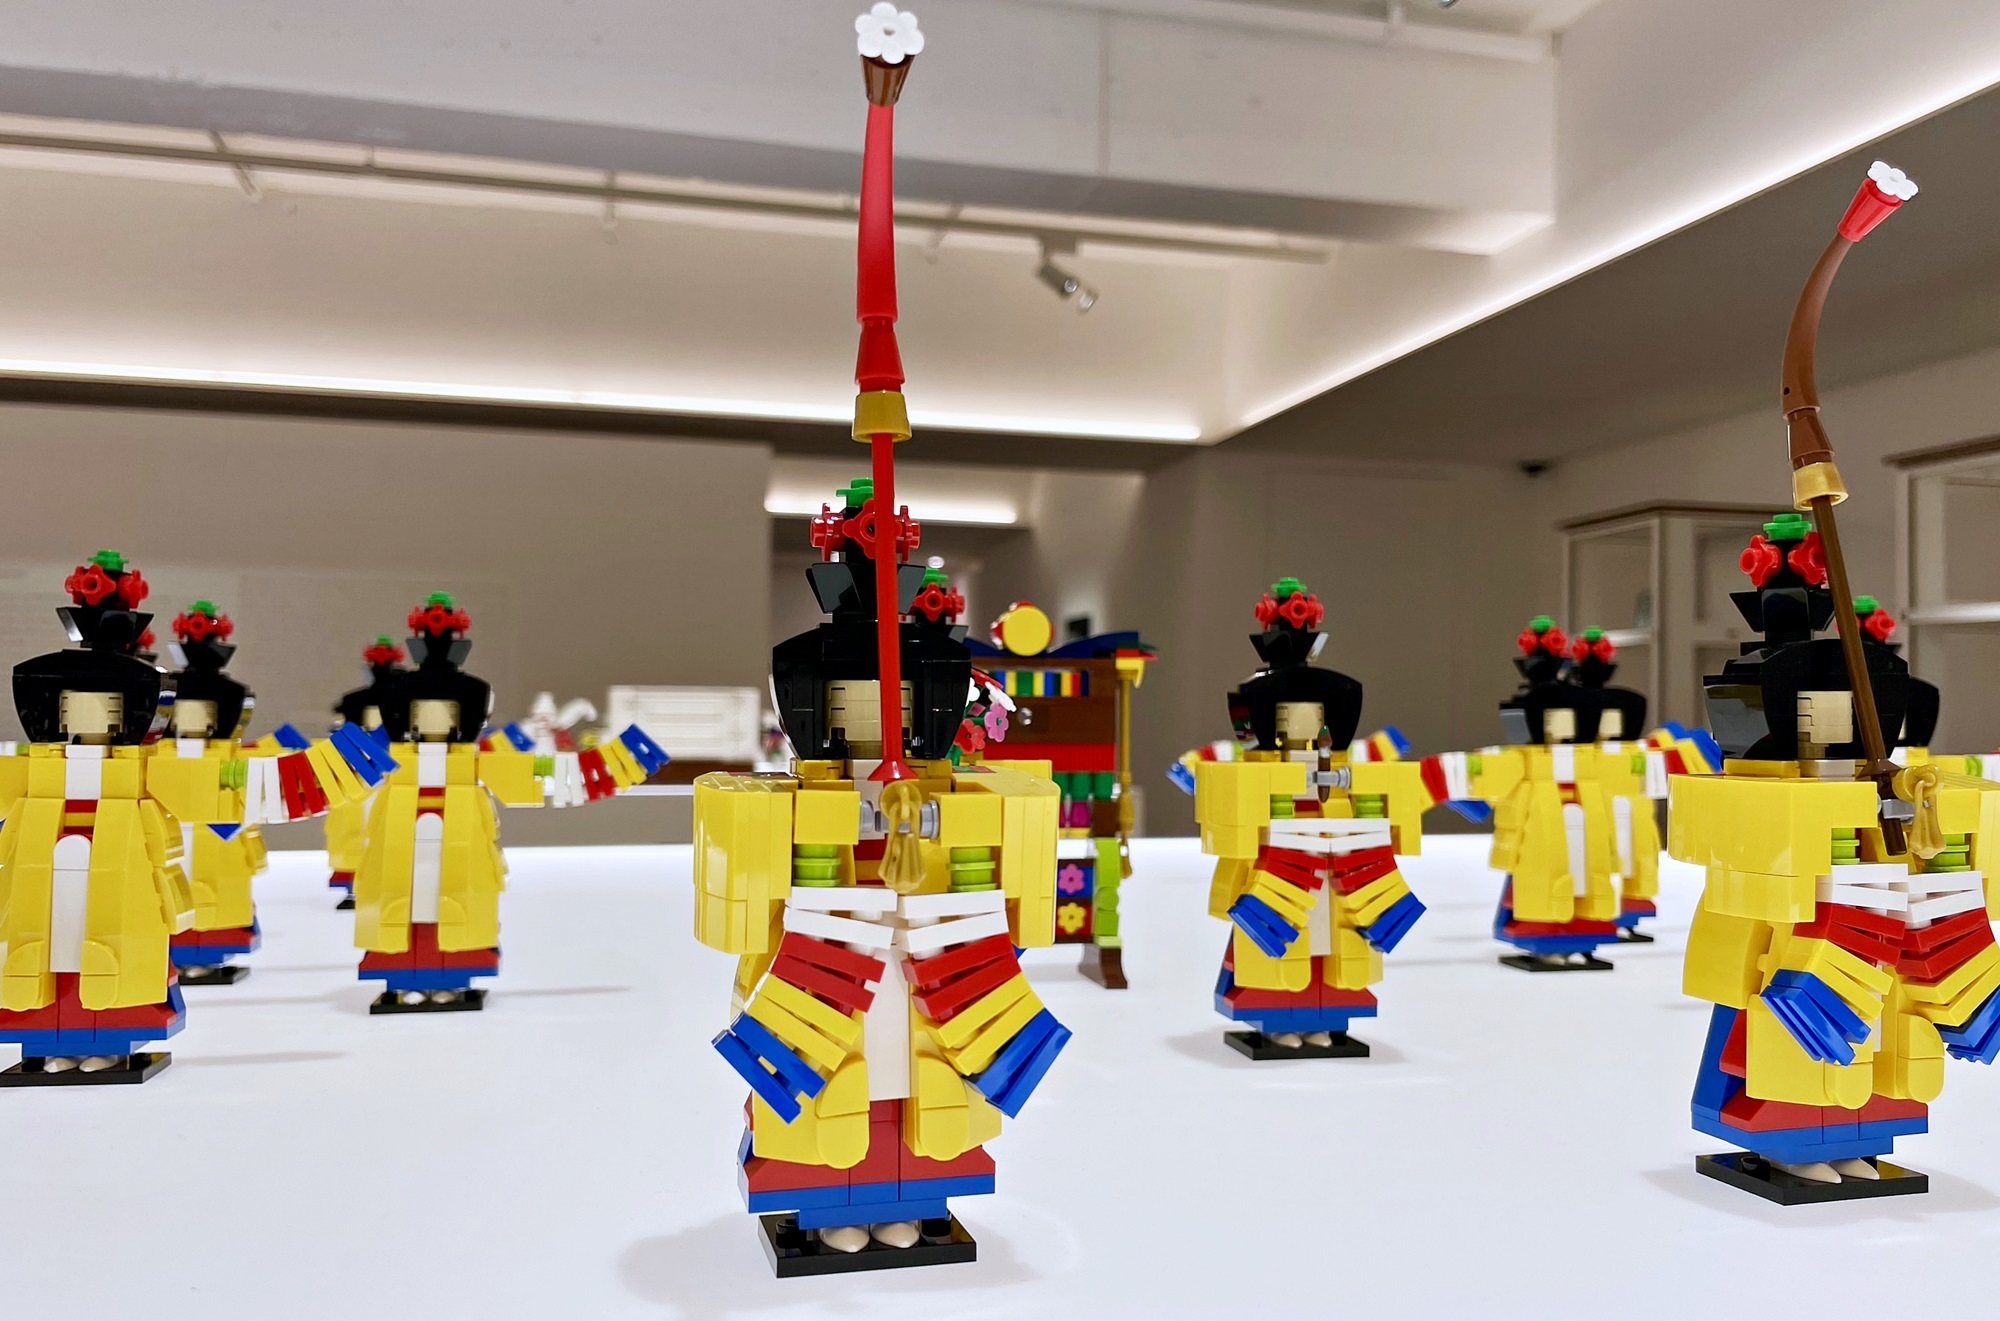 LEGO art on display at Minnesota « Tomodachi